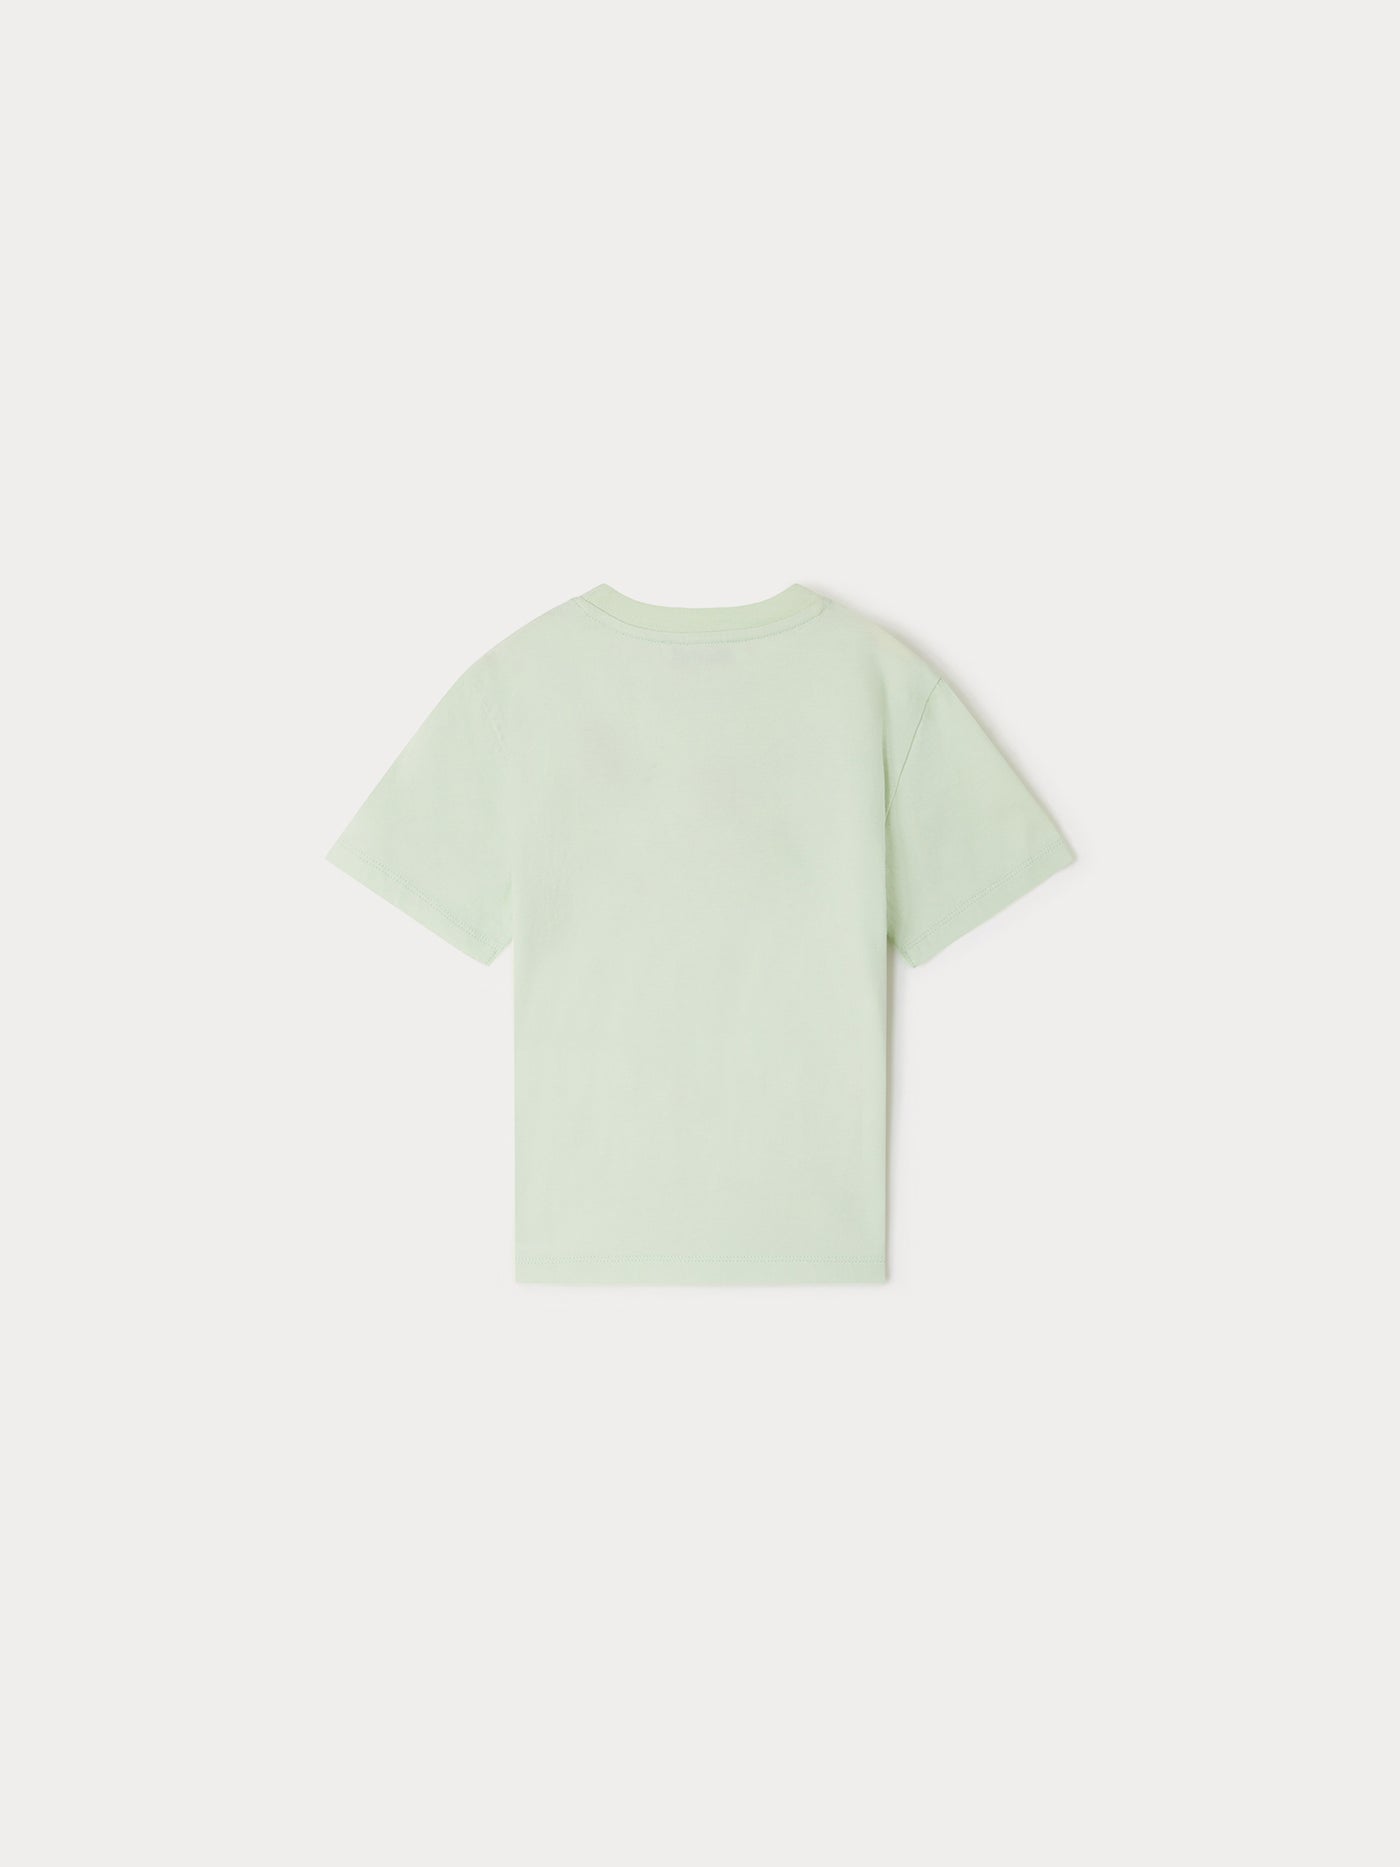 Soft T-Shirt in Cotton, Silk Optical White